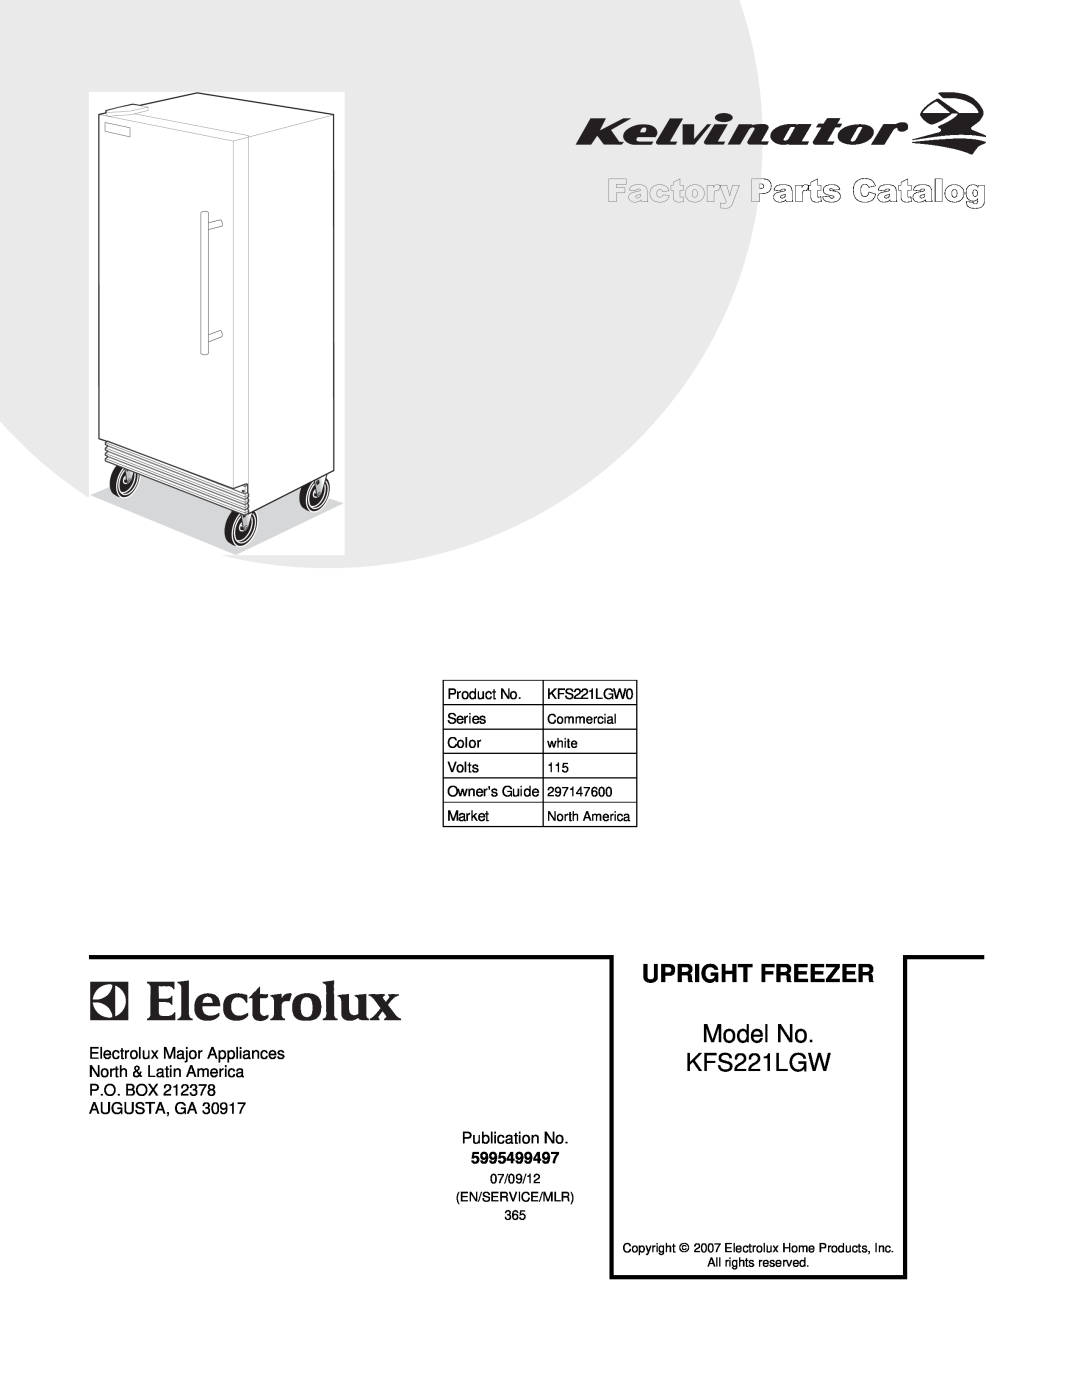 Electrolux manual Upright Freezer, Model No KFS221LGW, P08F0121.eps P08D0531.eps P08C1033.eps P08S0416.eps 